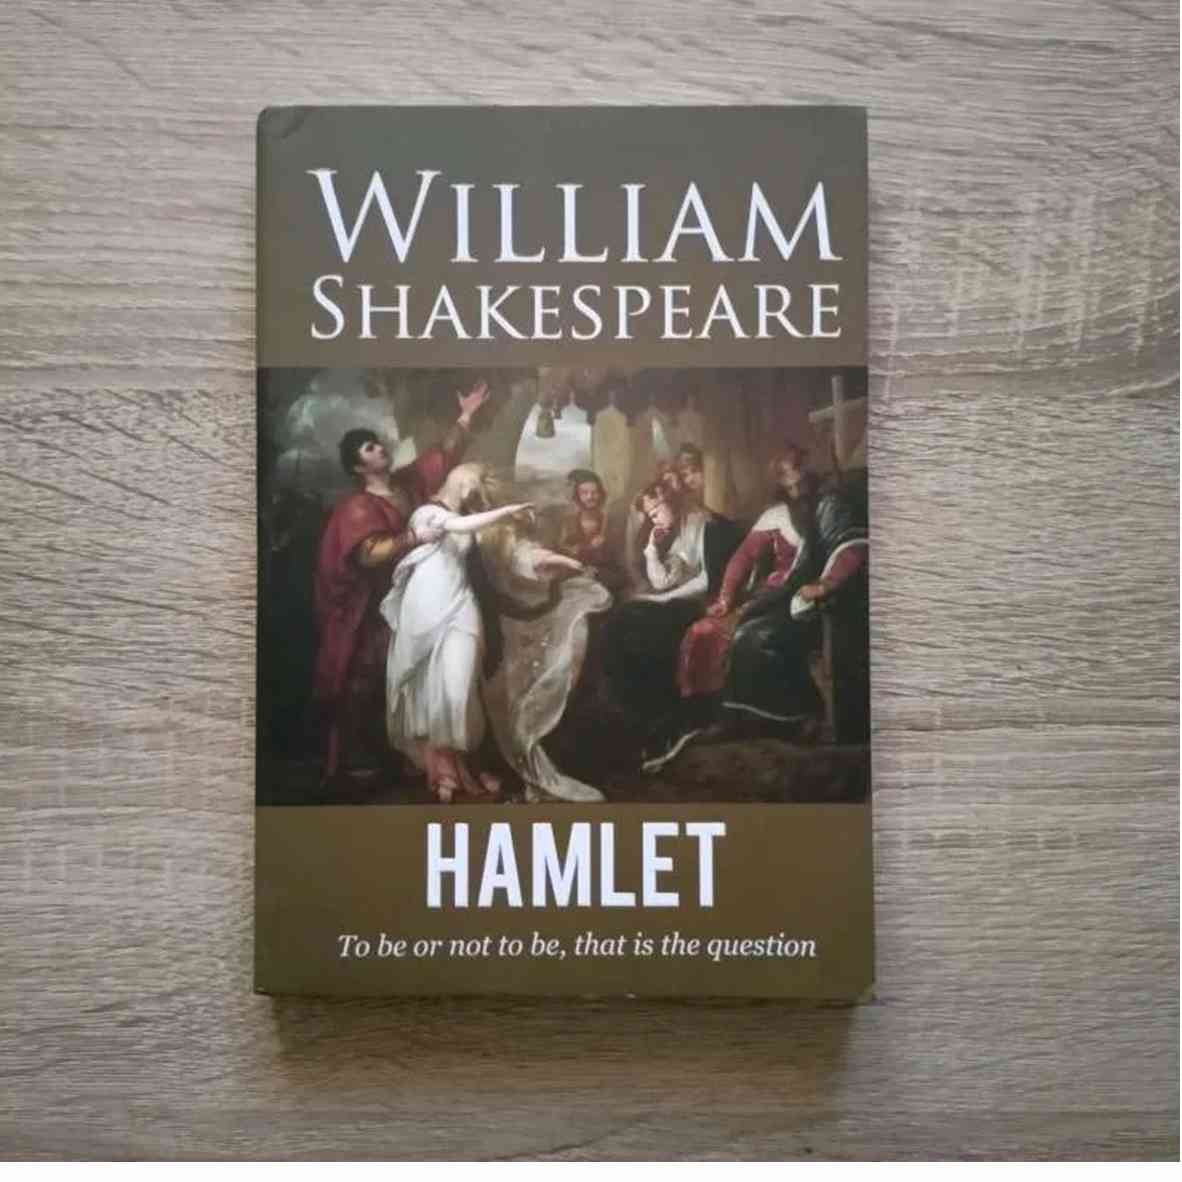 Ringkasan Cerita Novel Hamlet